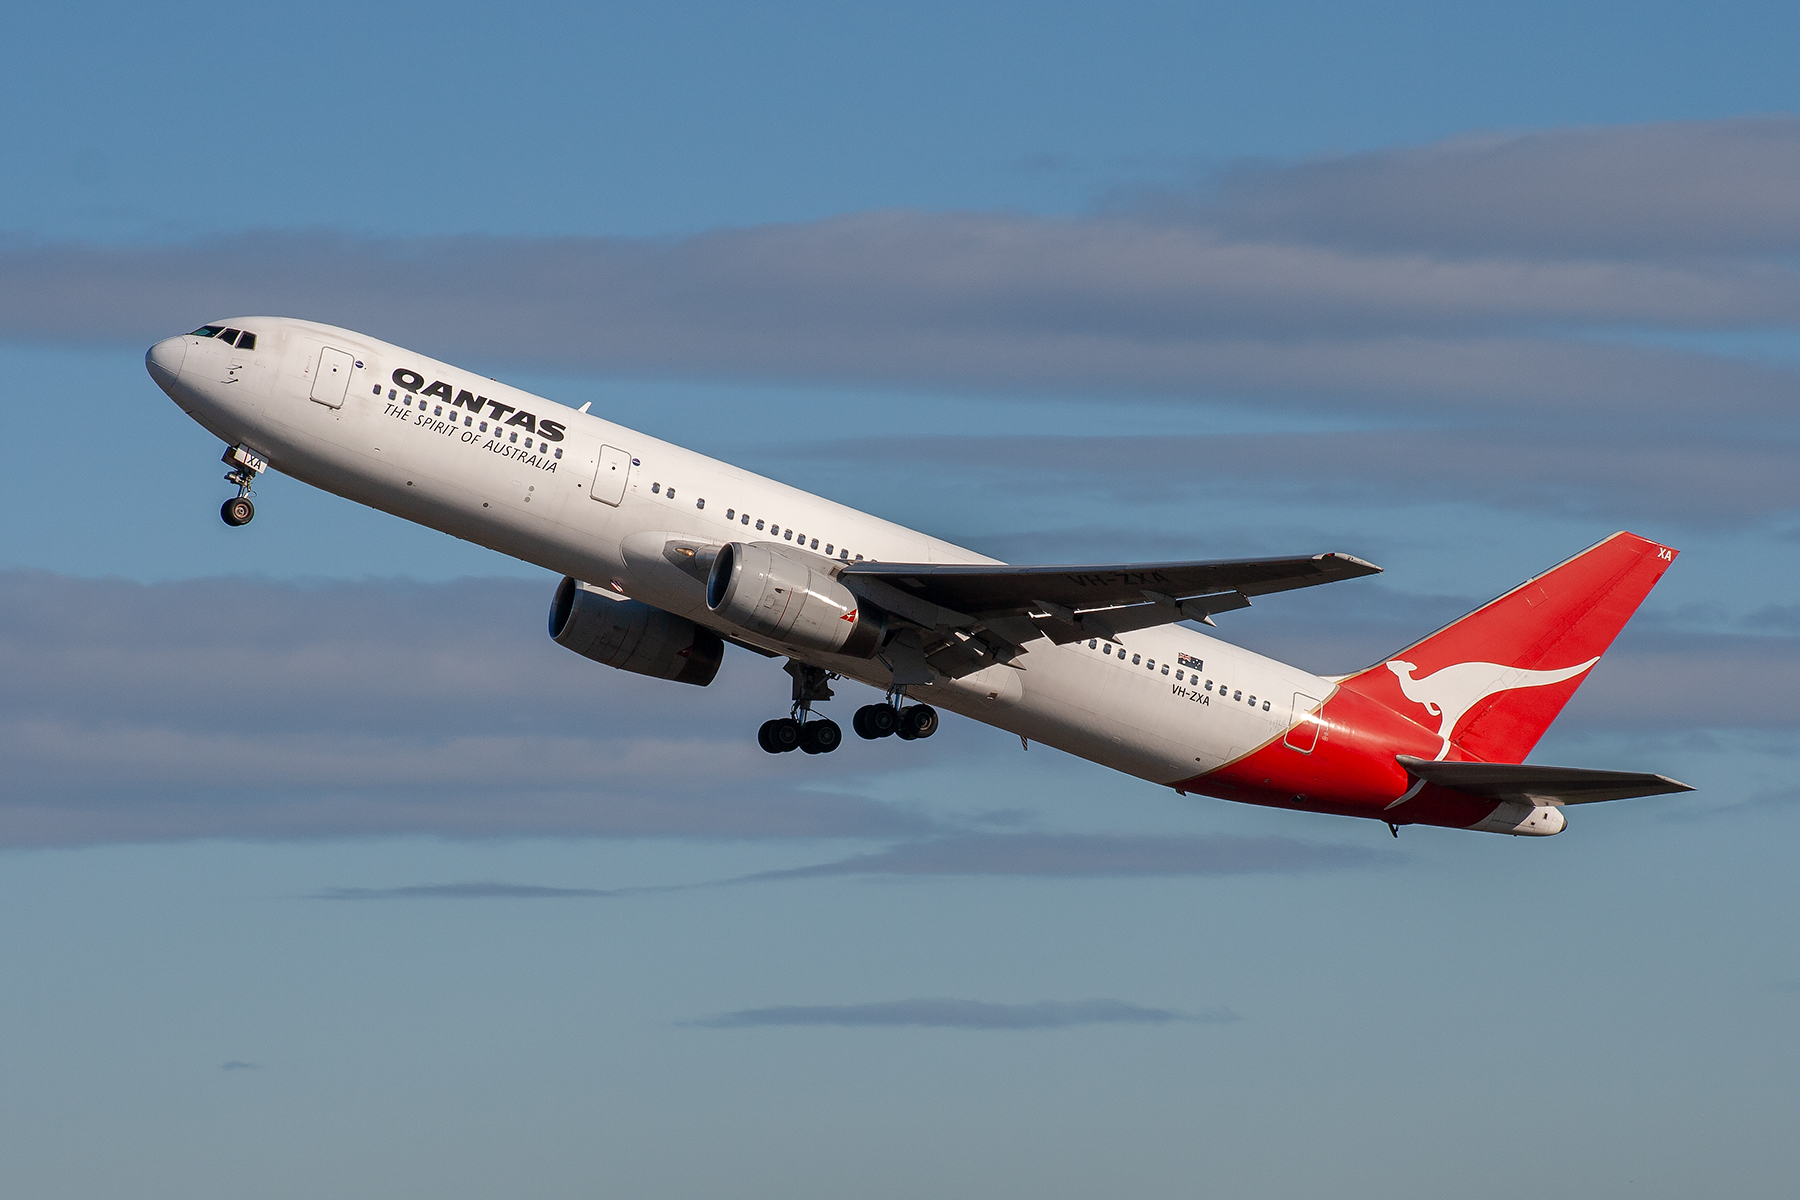 Qantas Boeing 767-300 VH-ZXA at Kingsford Smith